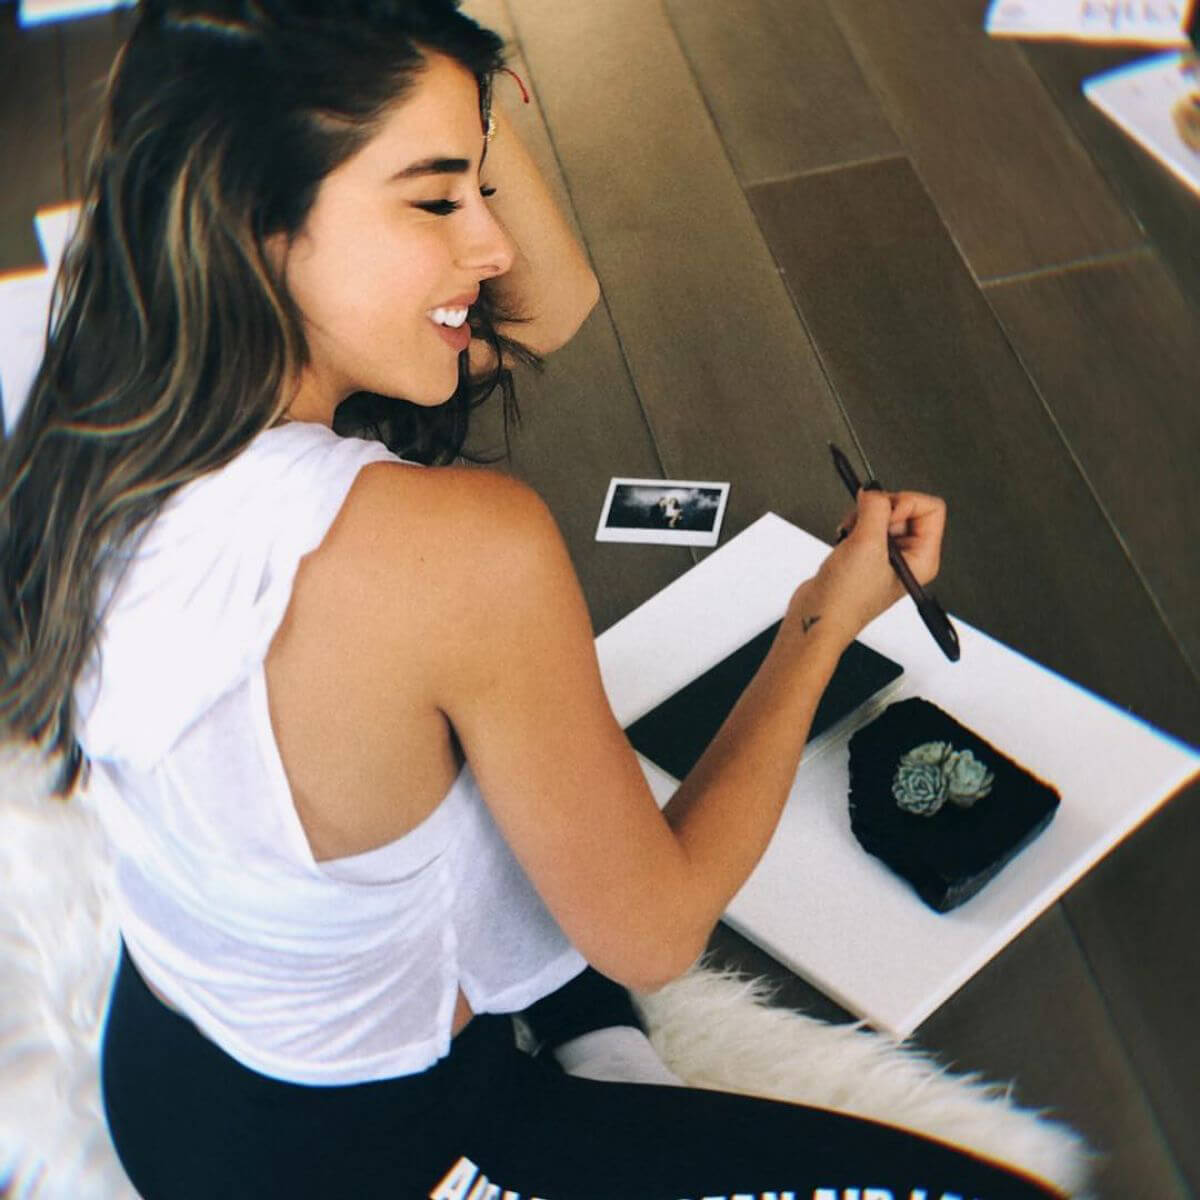 Daniella Monet in Instagram Pictures, December 2018